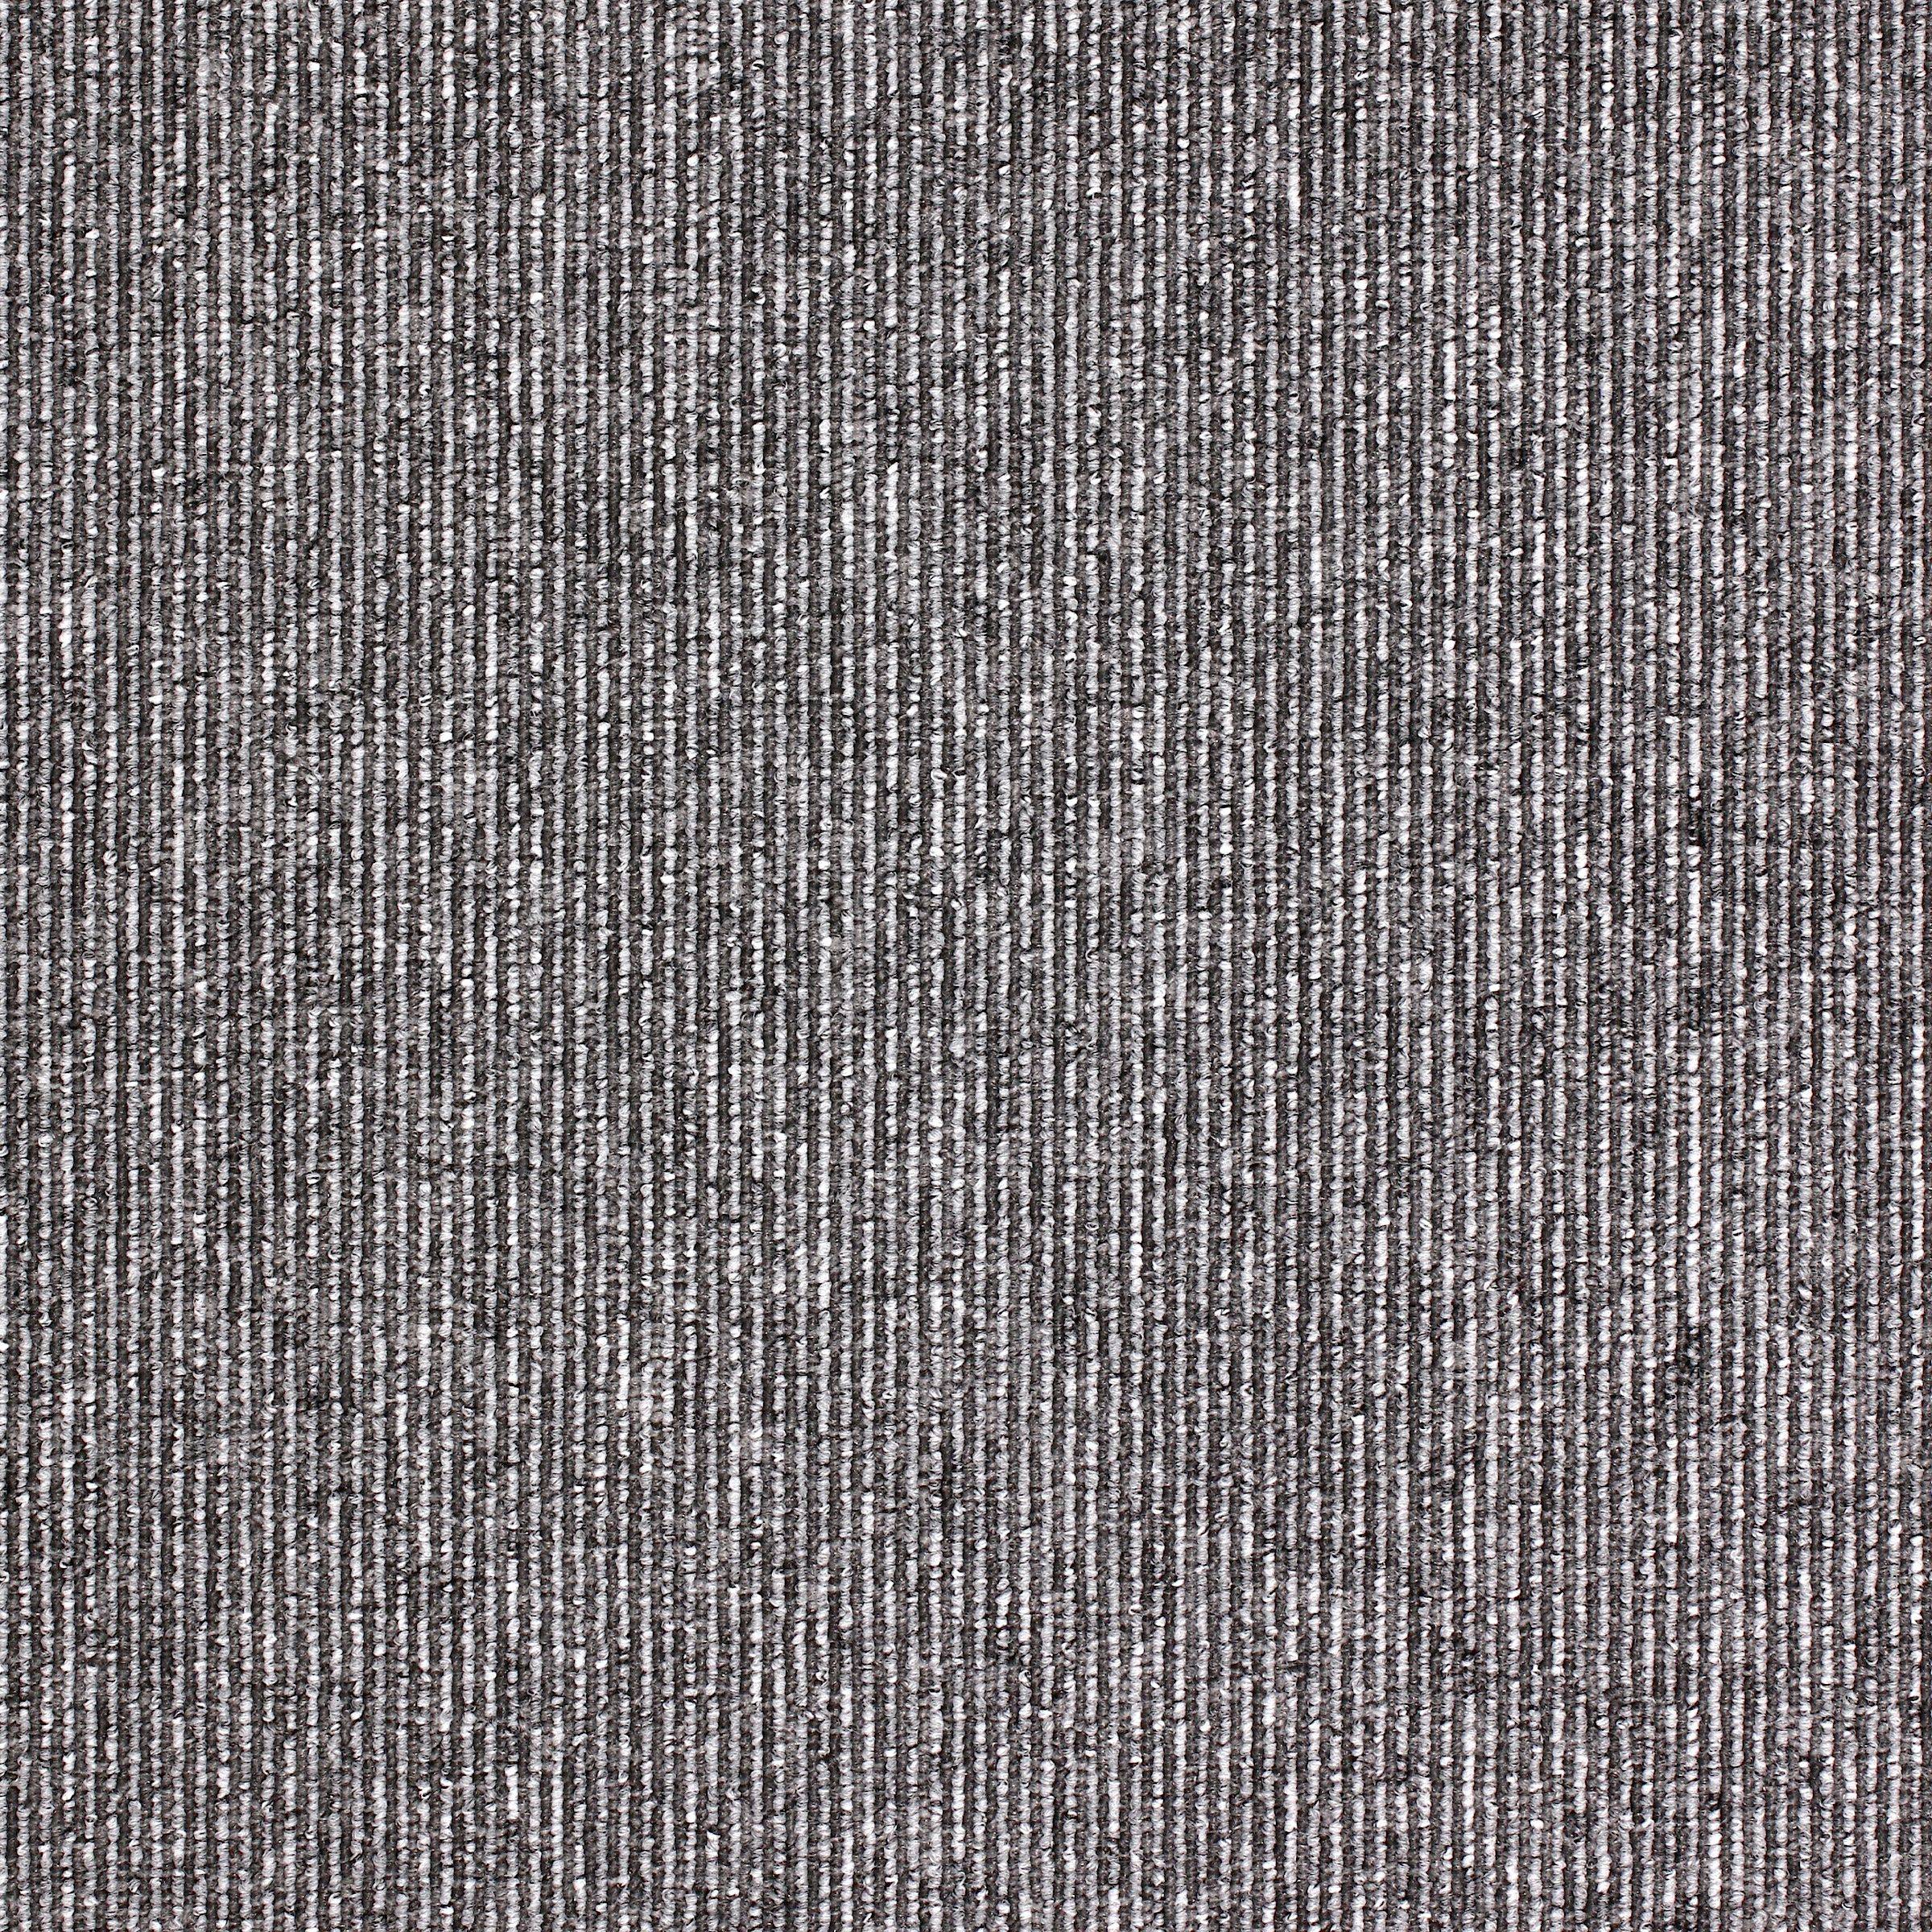 Flooring Hut Elements Carpet Tile Dark Grey Silver Stripe